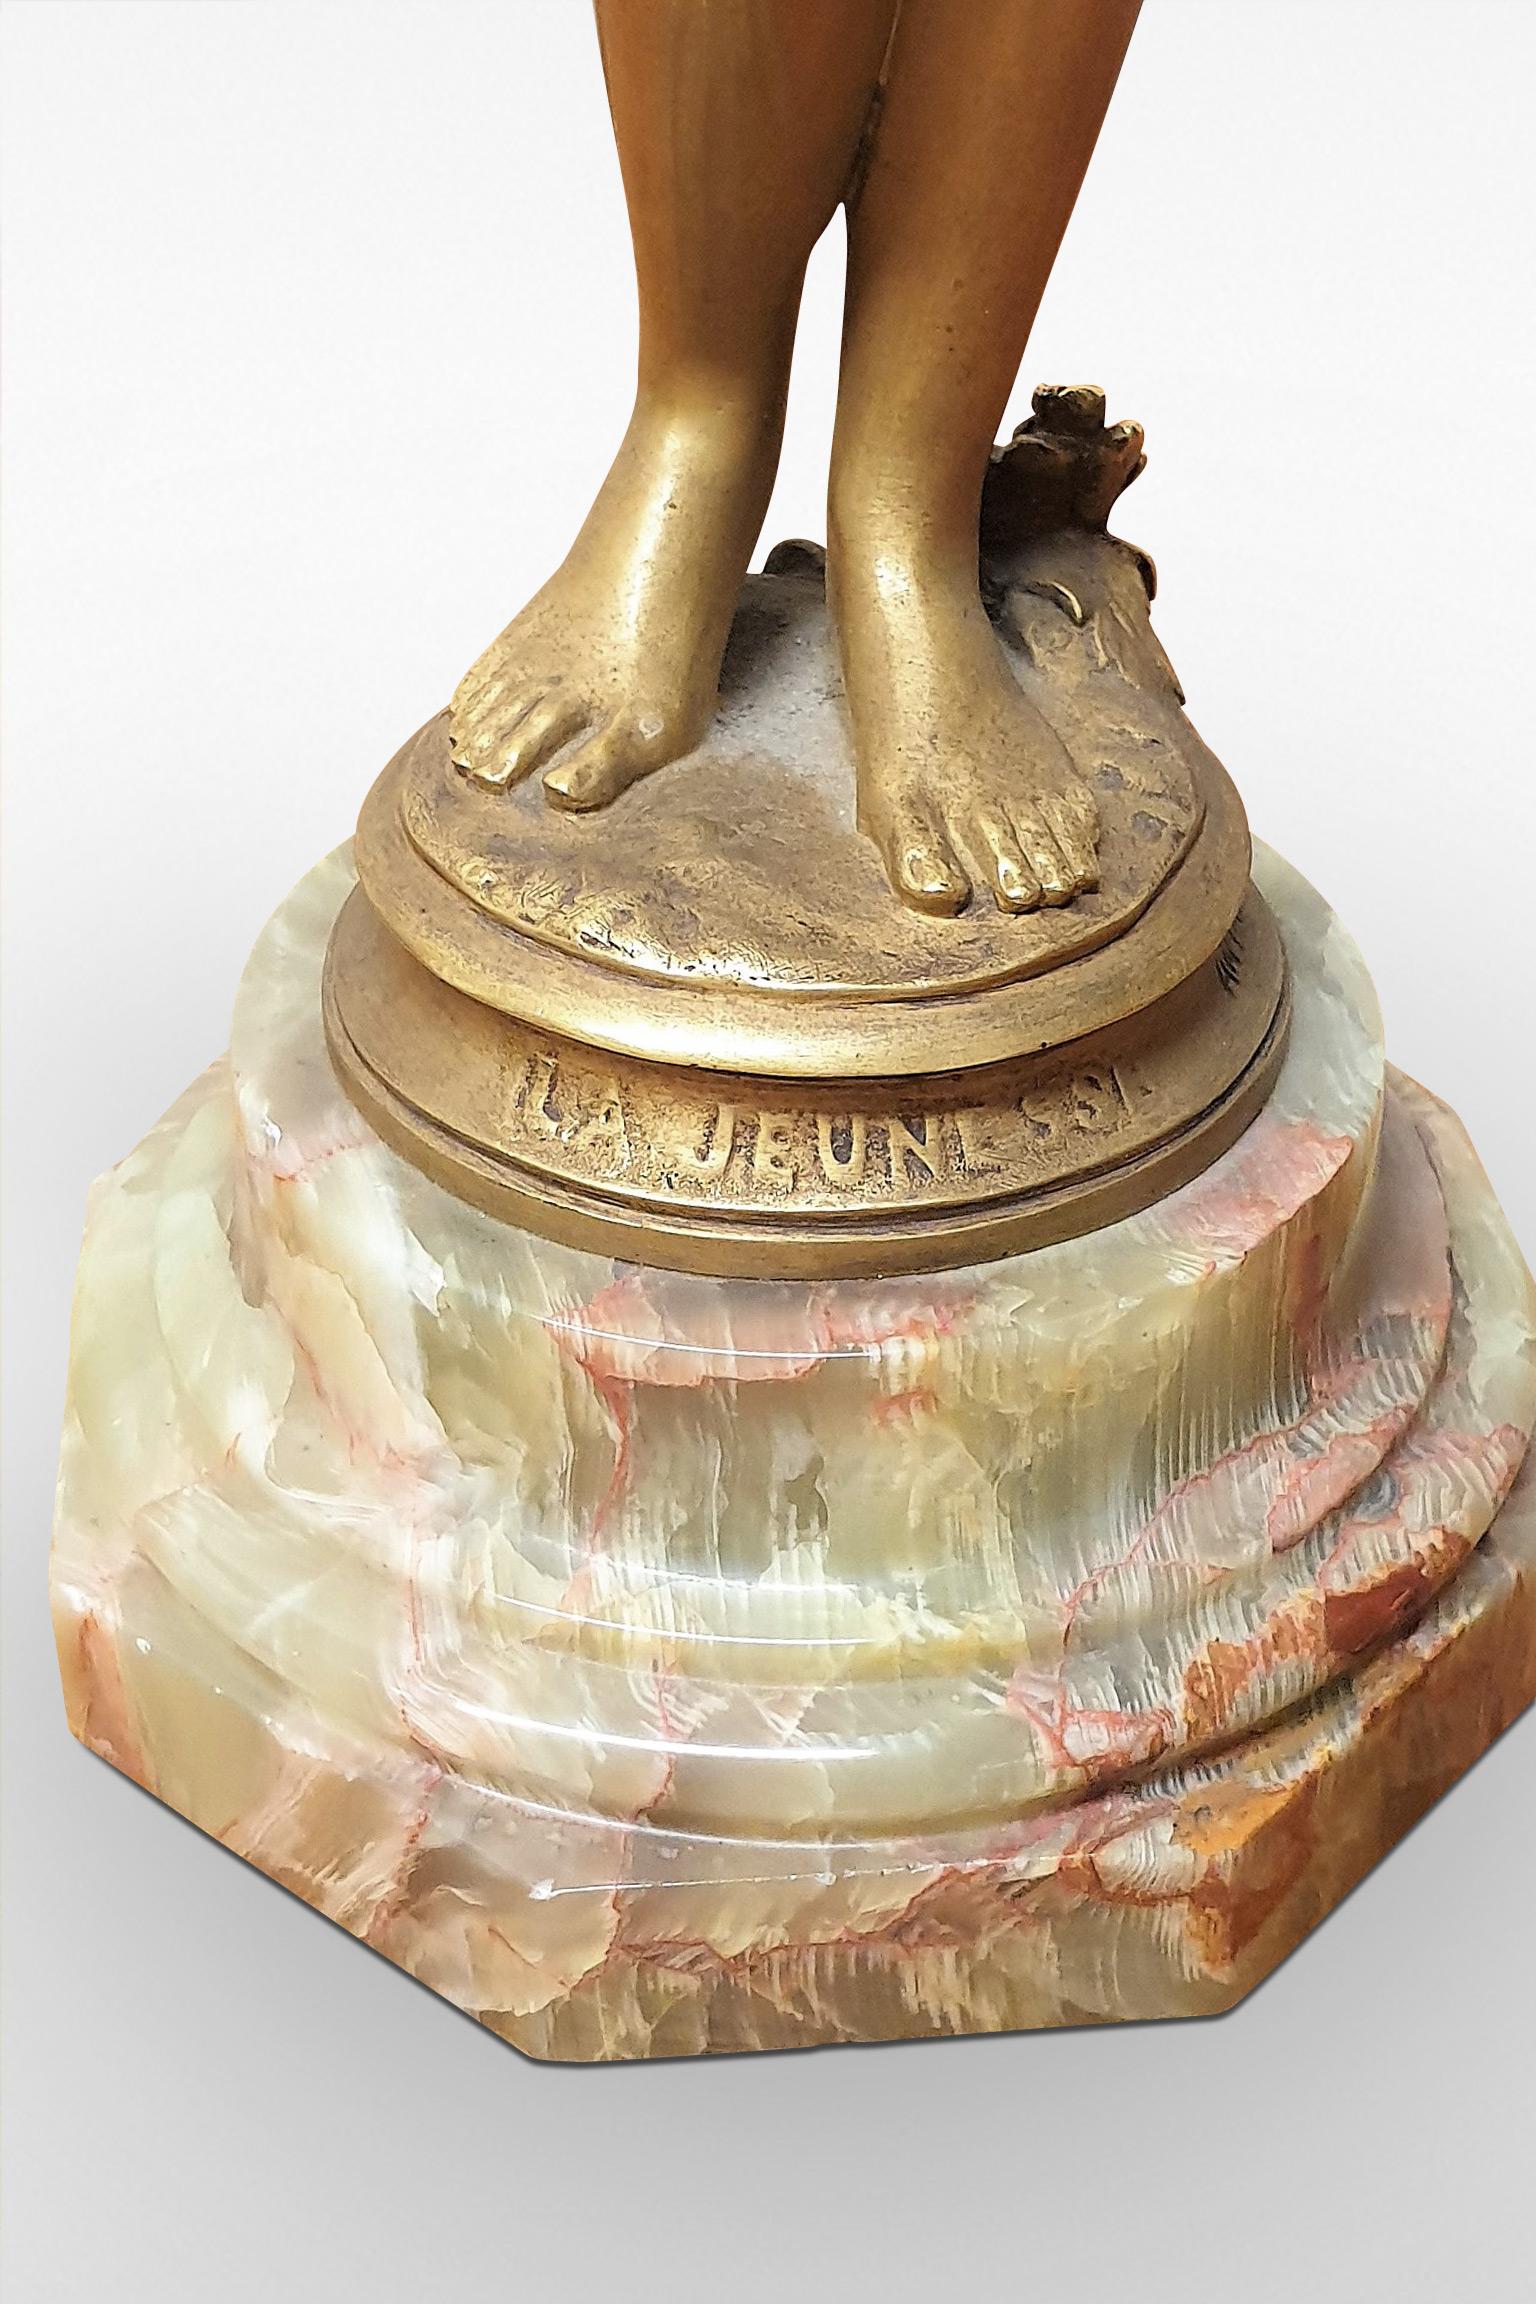 Antonin Carles Art Noueveau Bronze 'La Jeunesse' In Good Condition For Sale In Edenbridge, Kent